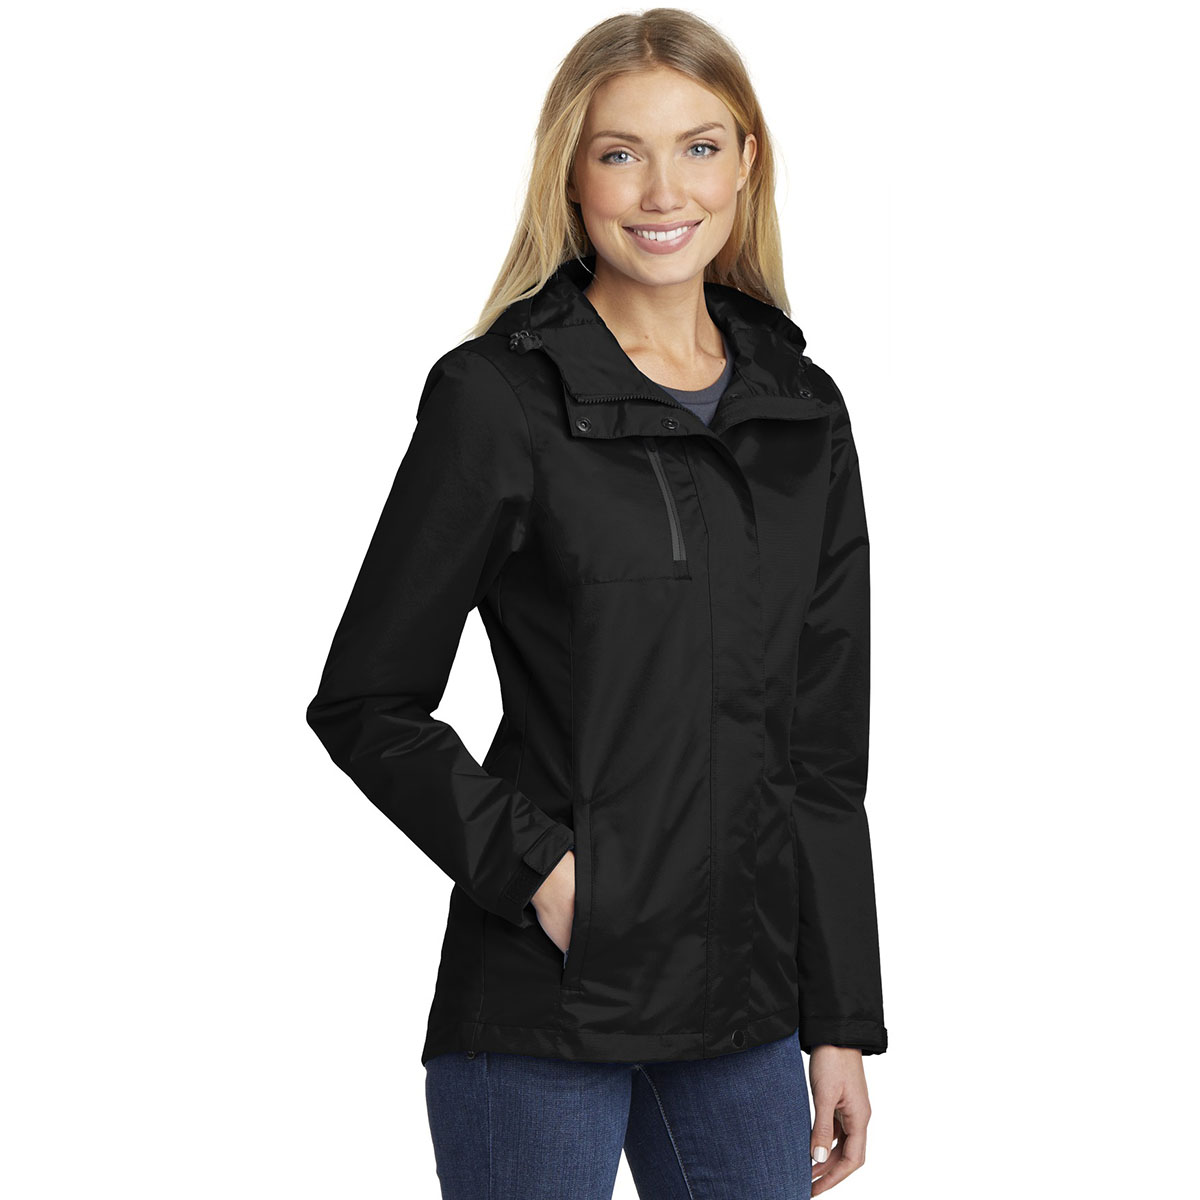 Port Authority L331 Ladies All-Conditions Jacket - Black | FullSource.com